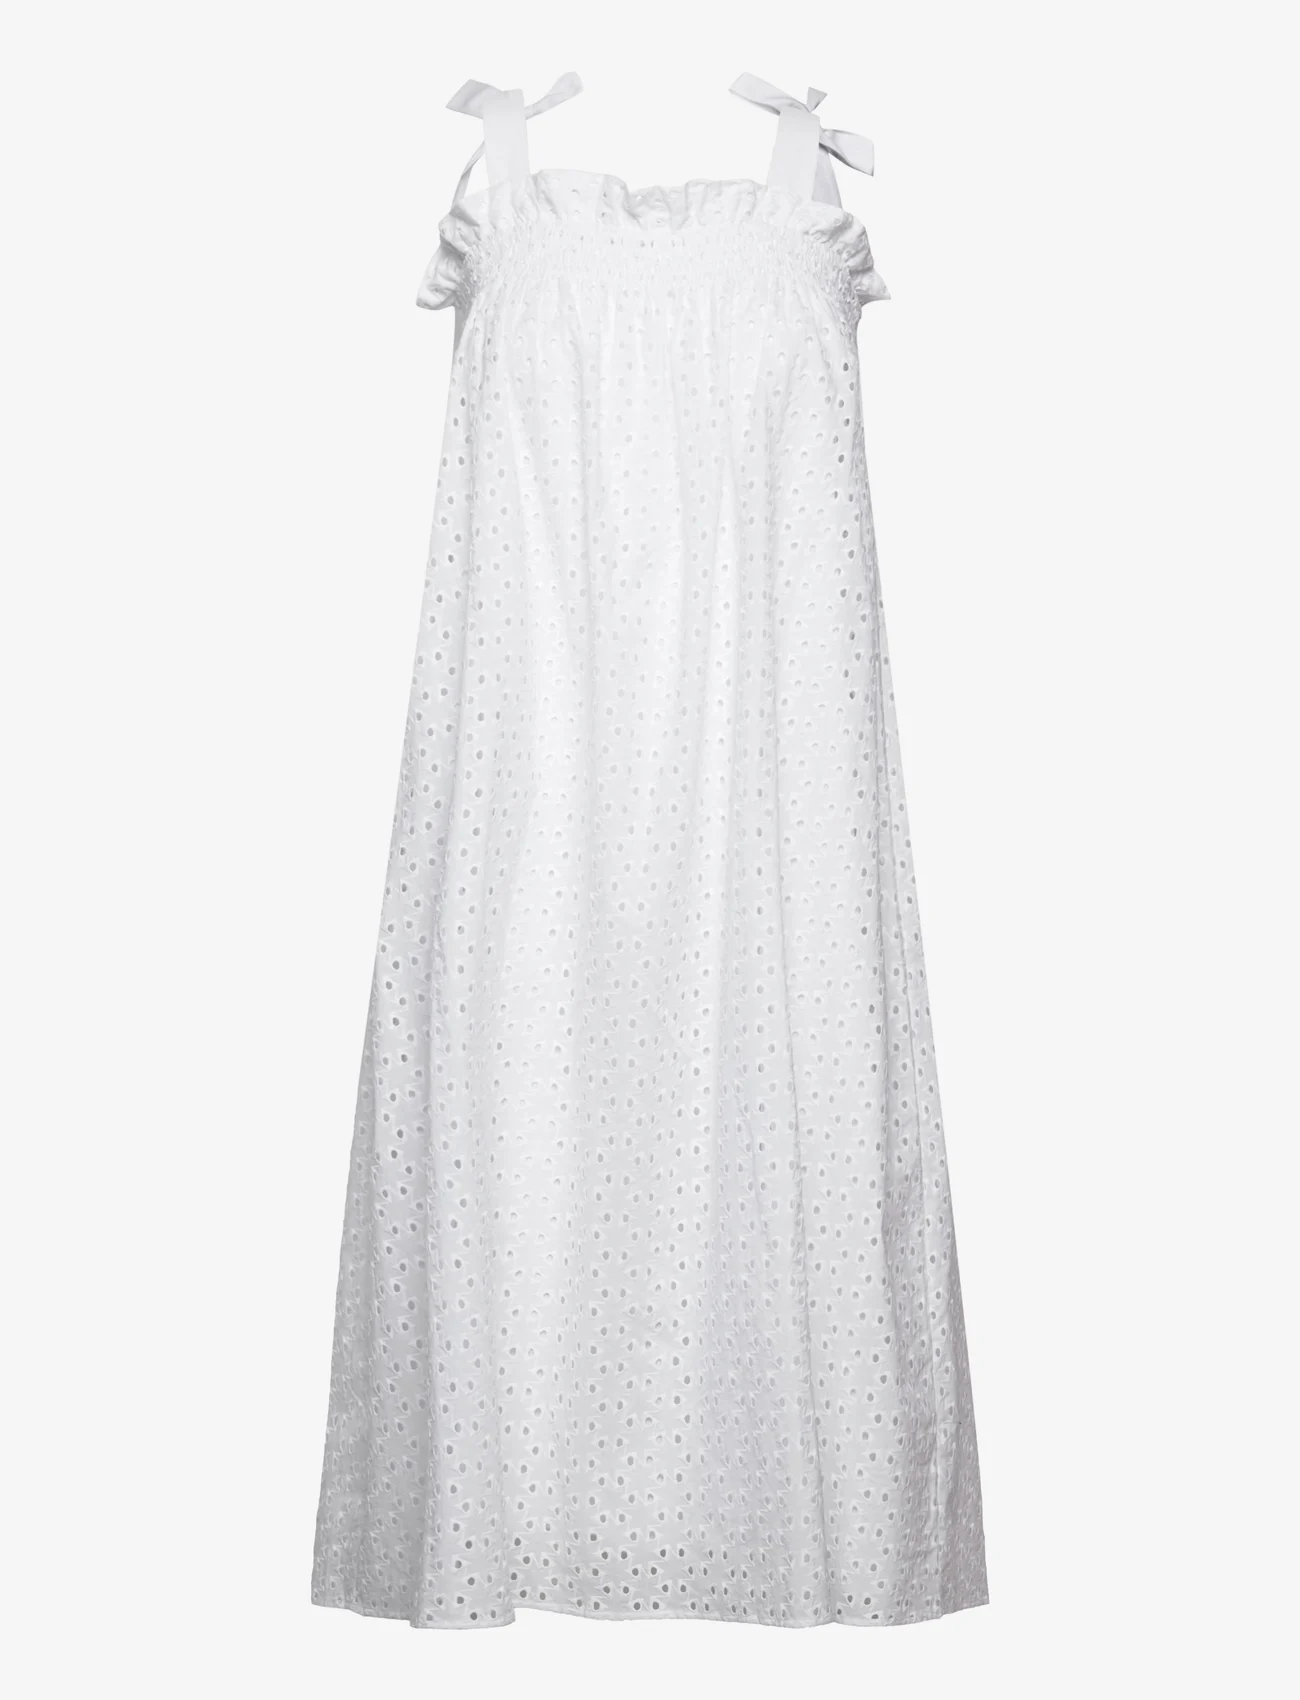 Bruuns Bazaar - Clianta Christine dress - sukienki koronkowe - white - 0